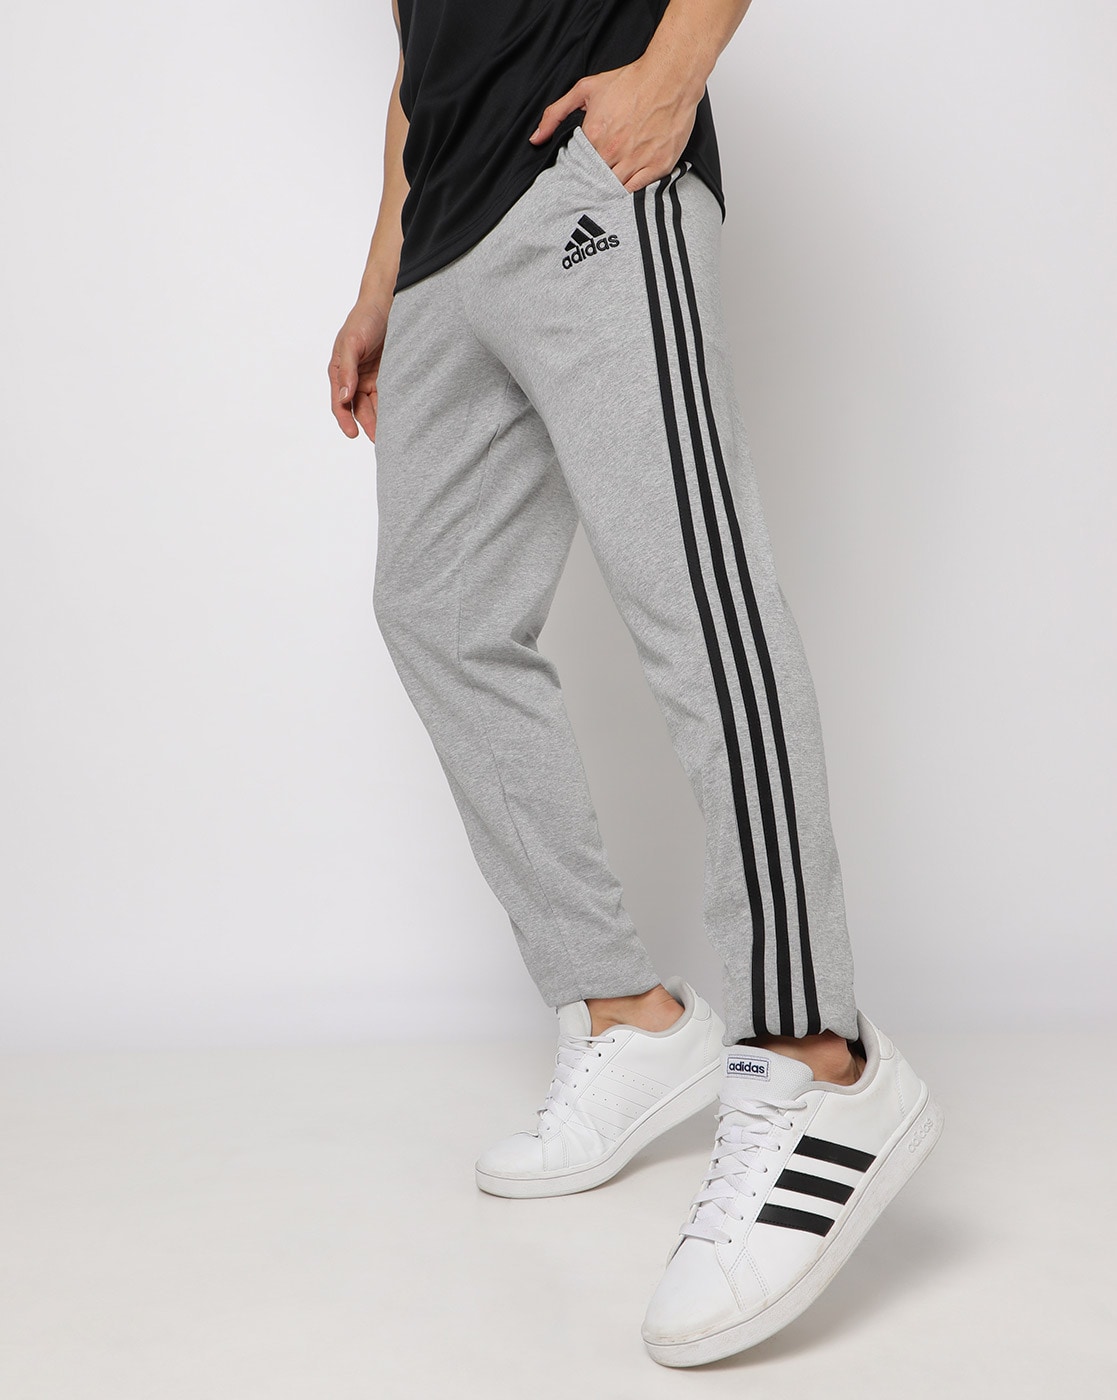 Adidas Primeblue Superstar Track Pants Black/White – Bronx Clothing